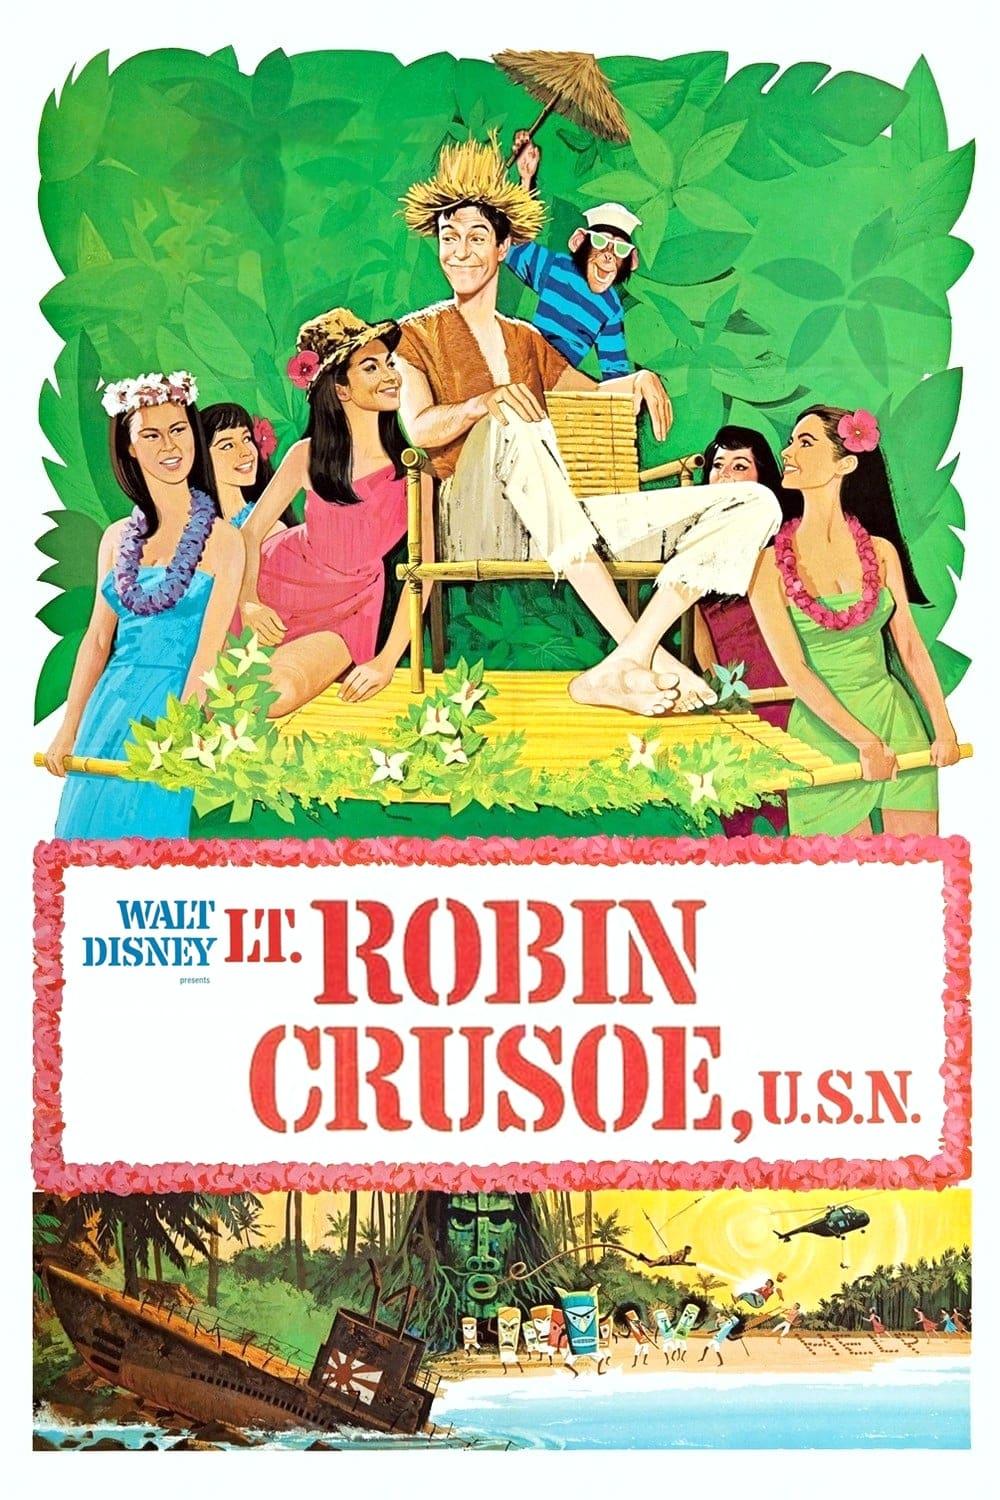 Lt. Robin Crusoe U.S.N. poster